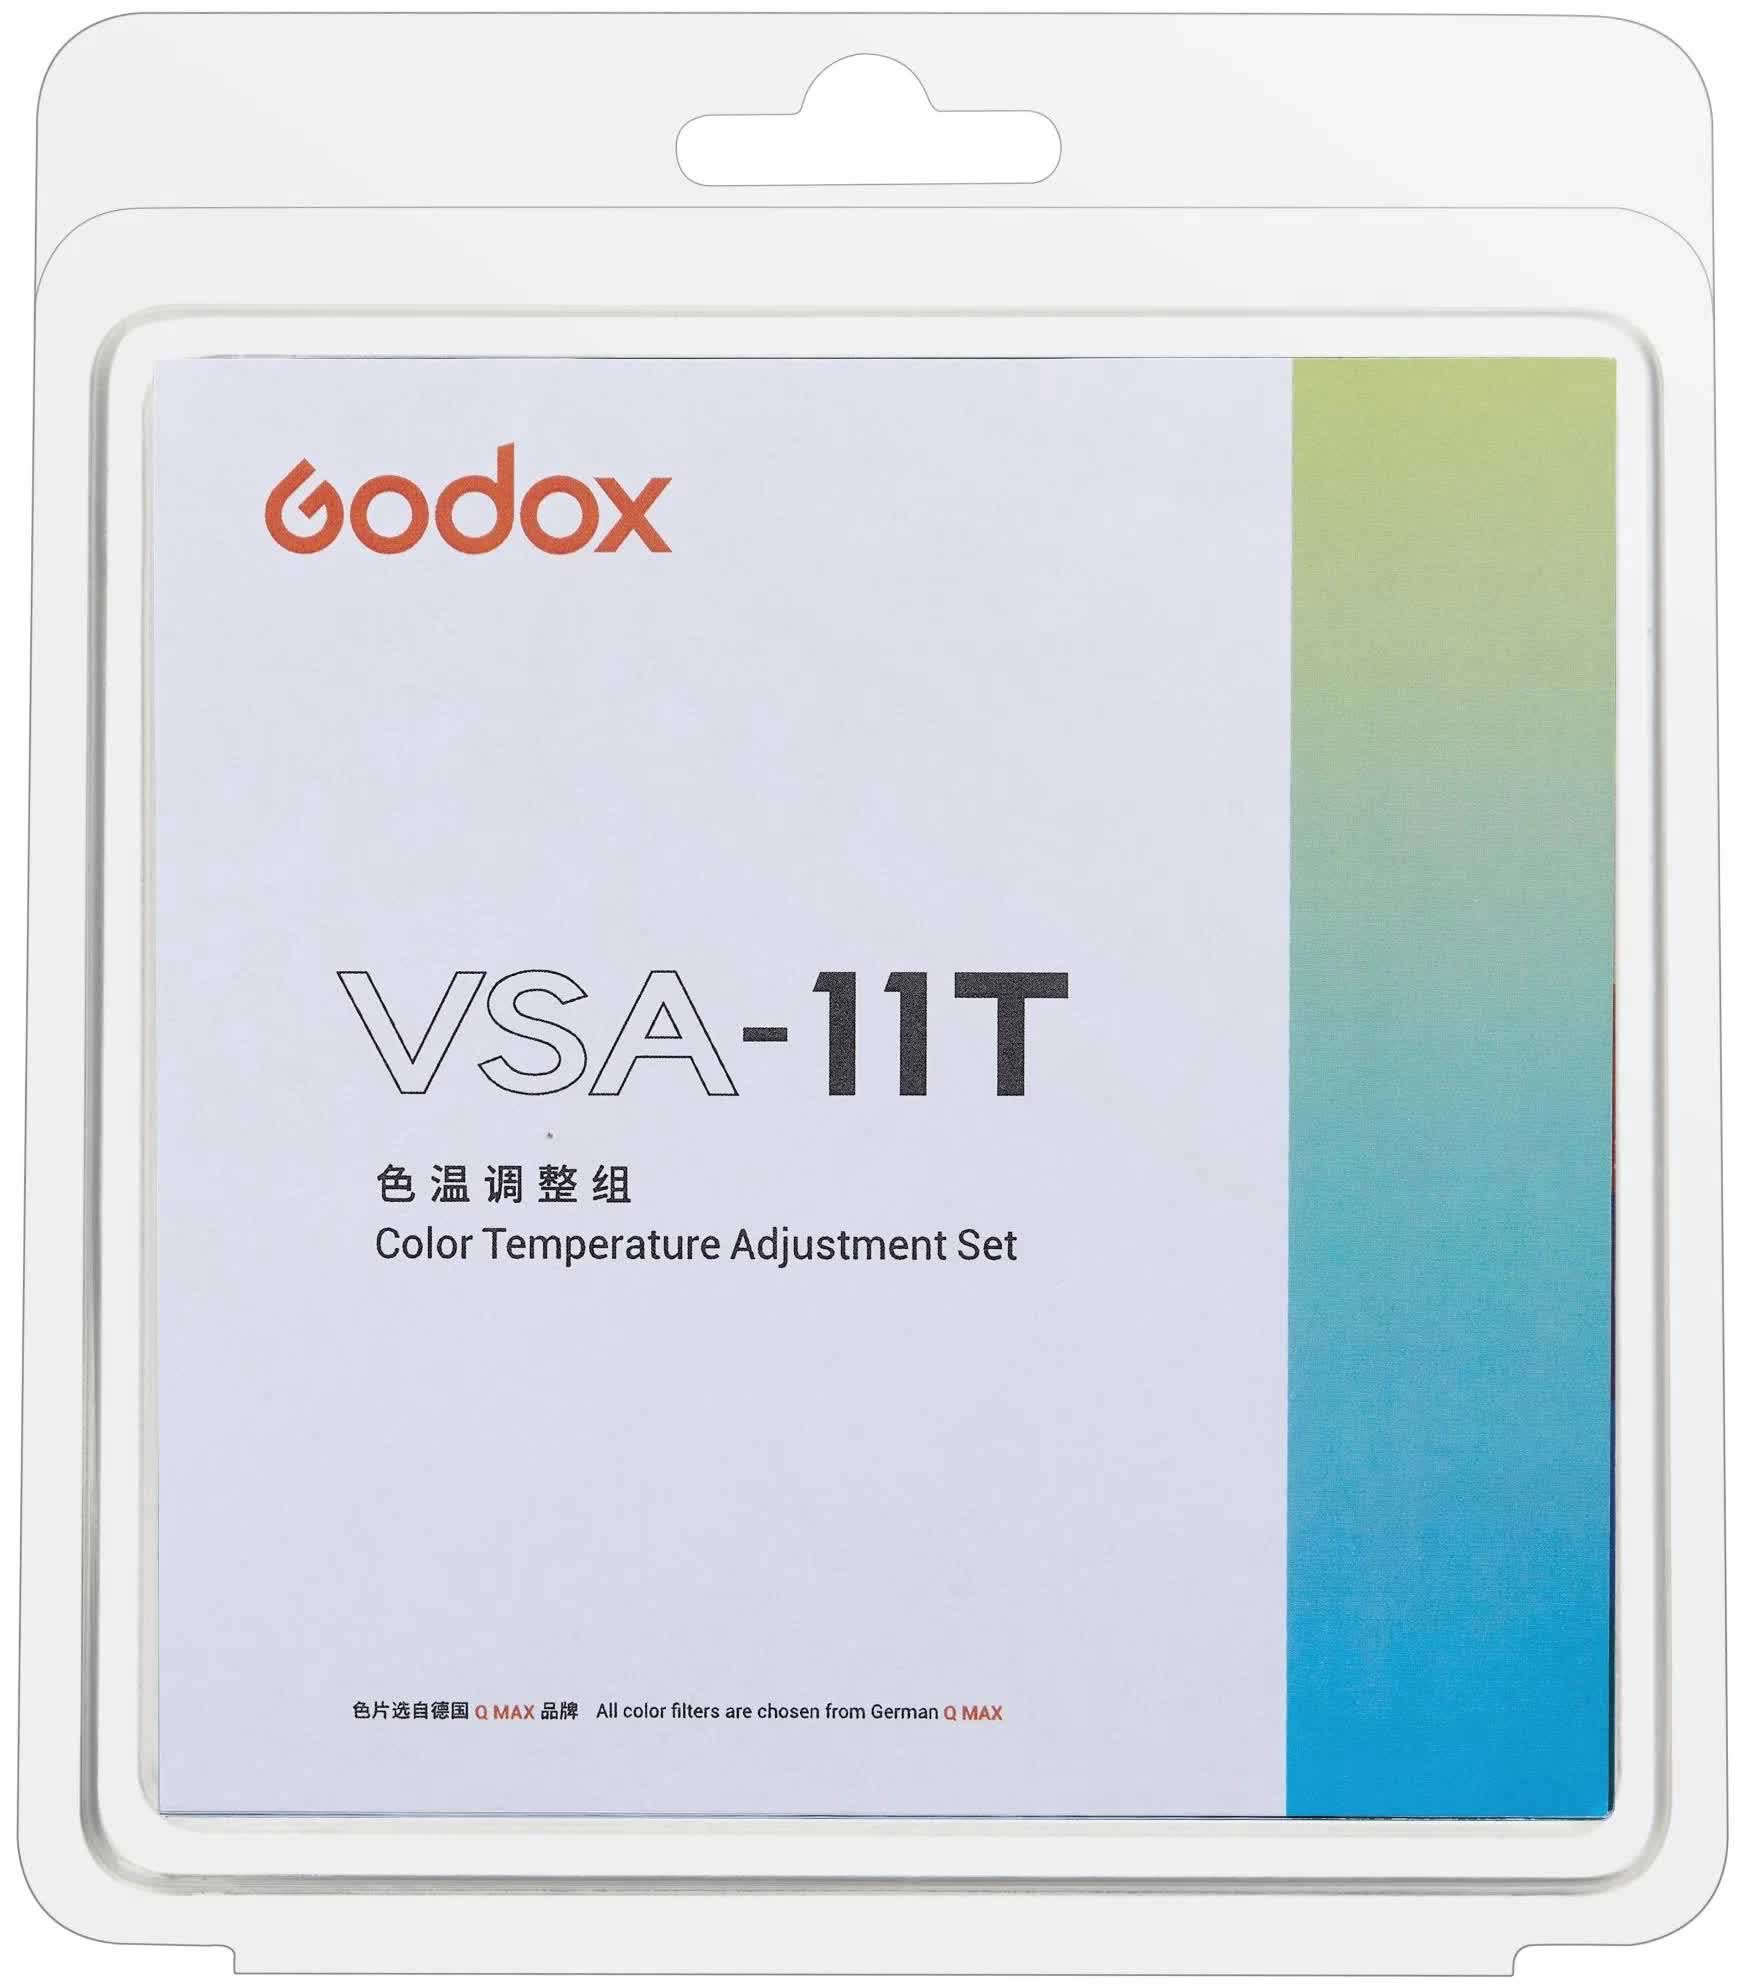 Набор цветокоррекционных фильтров Godox VSA-11T цена и фото